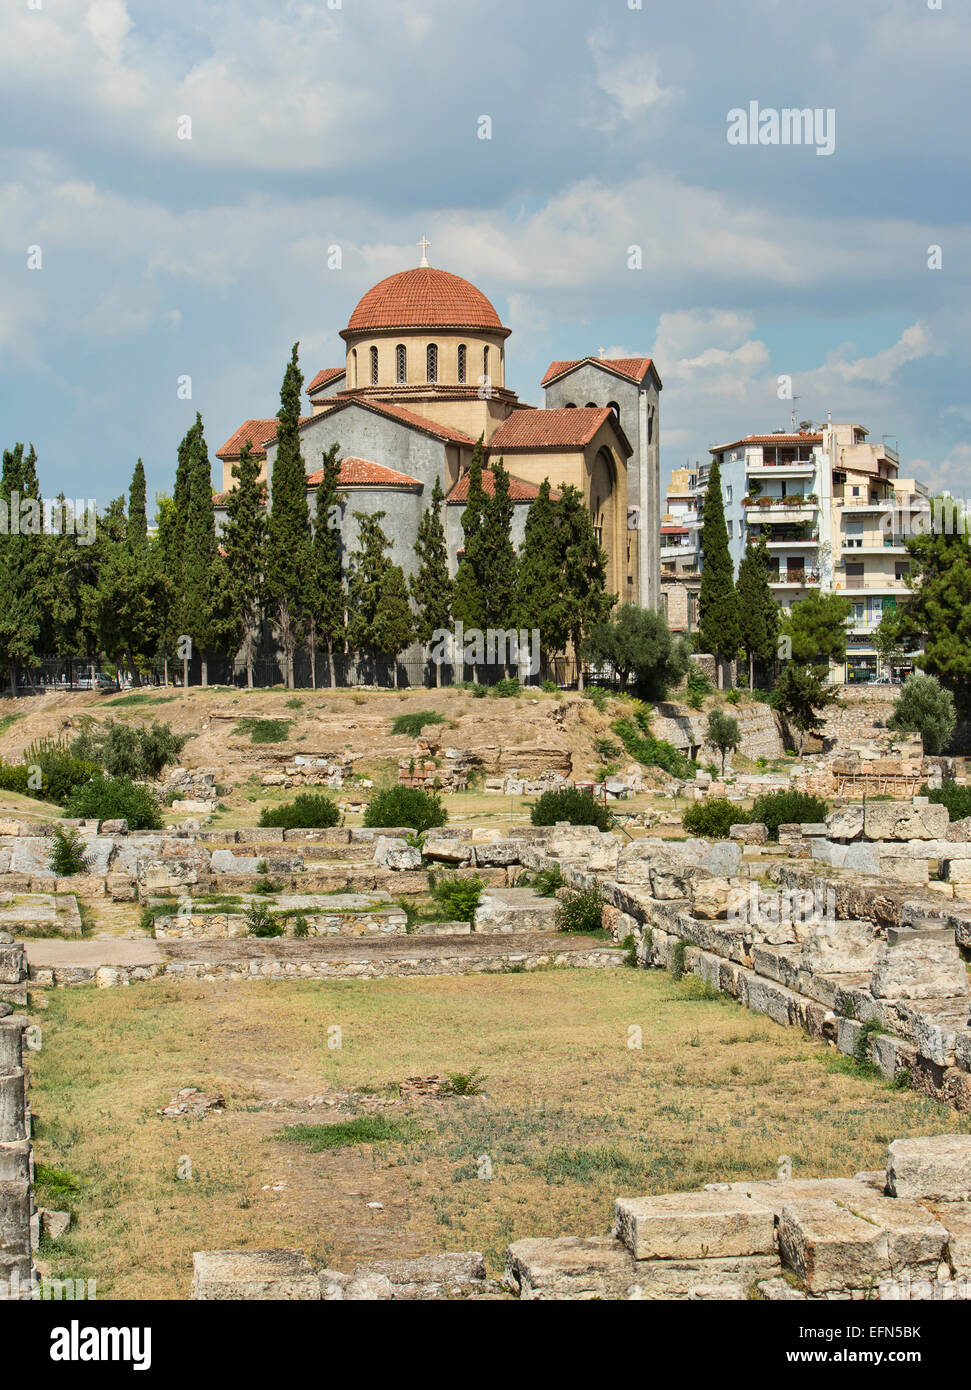 Atenas, Grecia la Iglesia de la Santísima Trinidad cementerio Keramikos. Foto de stock